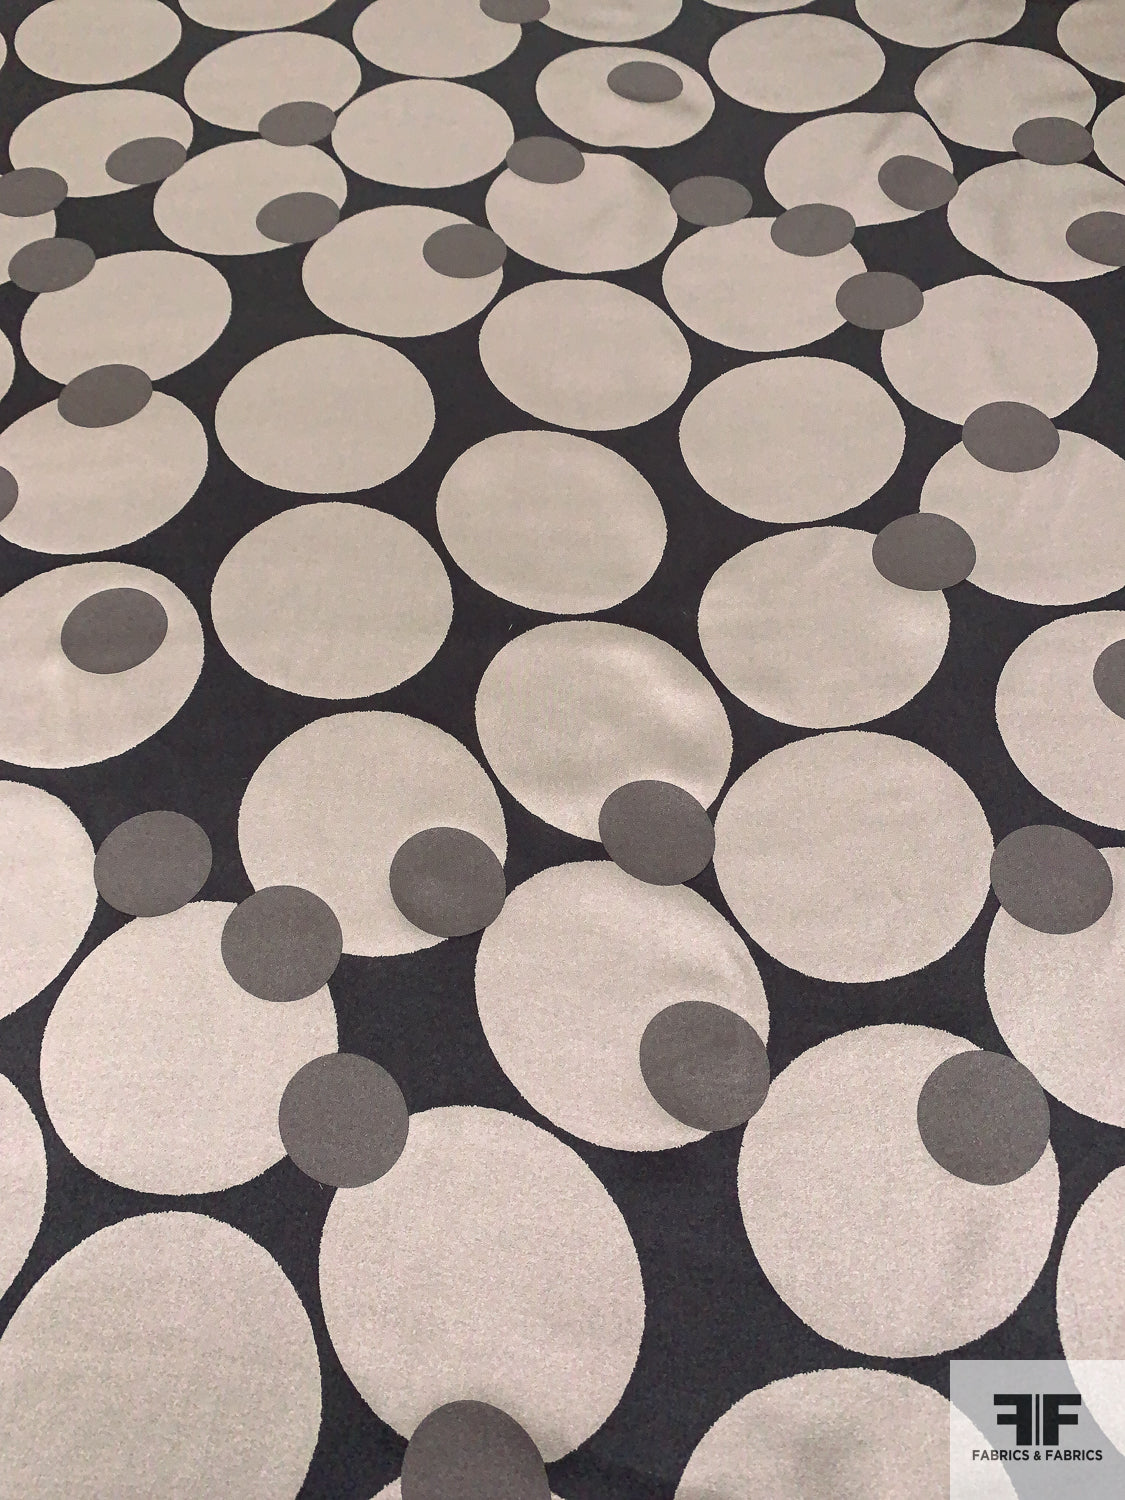 Circle Theme Printed Silk Charmeuse - Taupe / Dark Taupe / Black